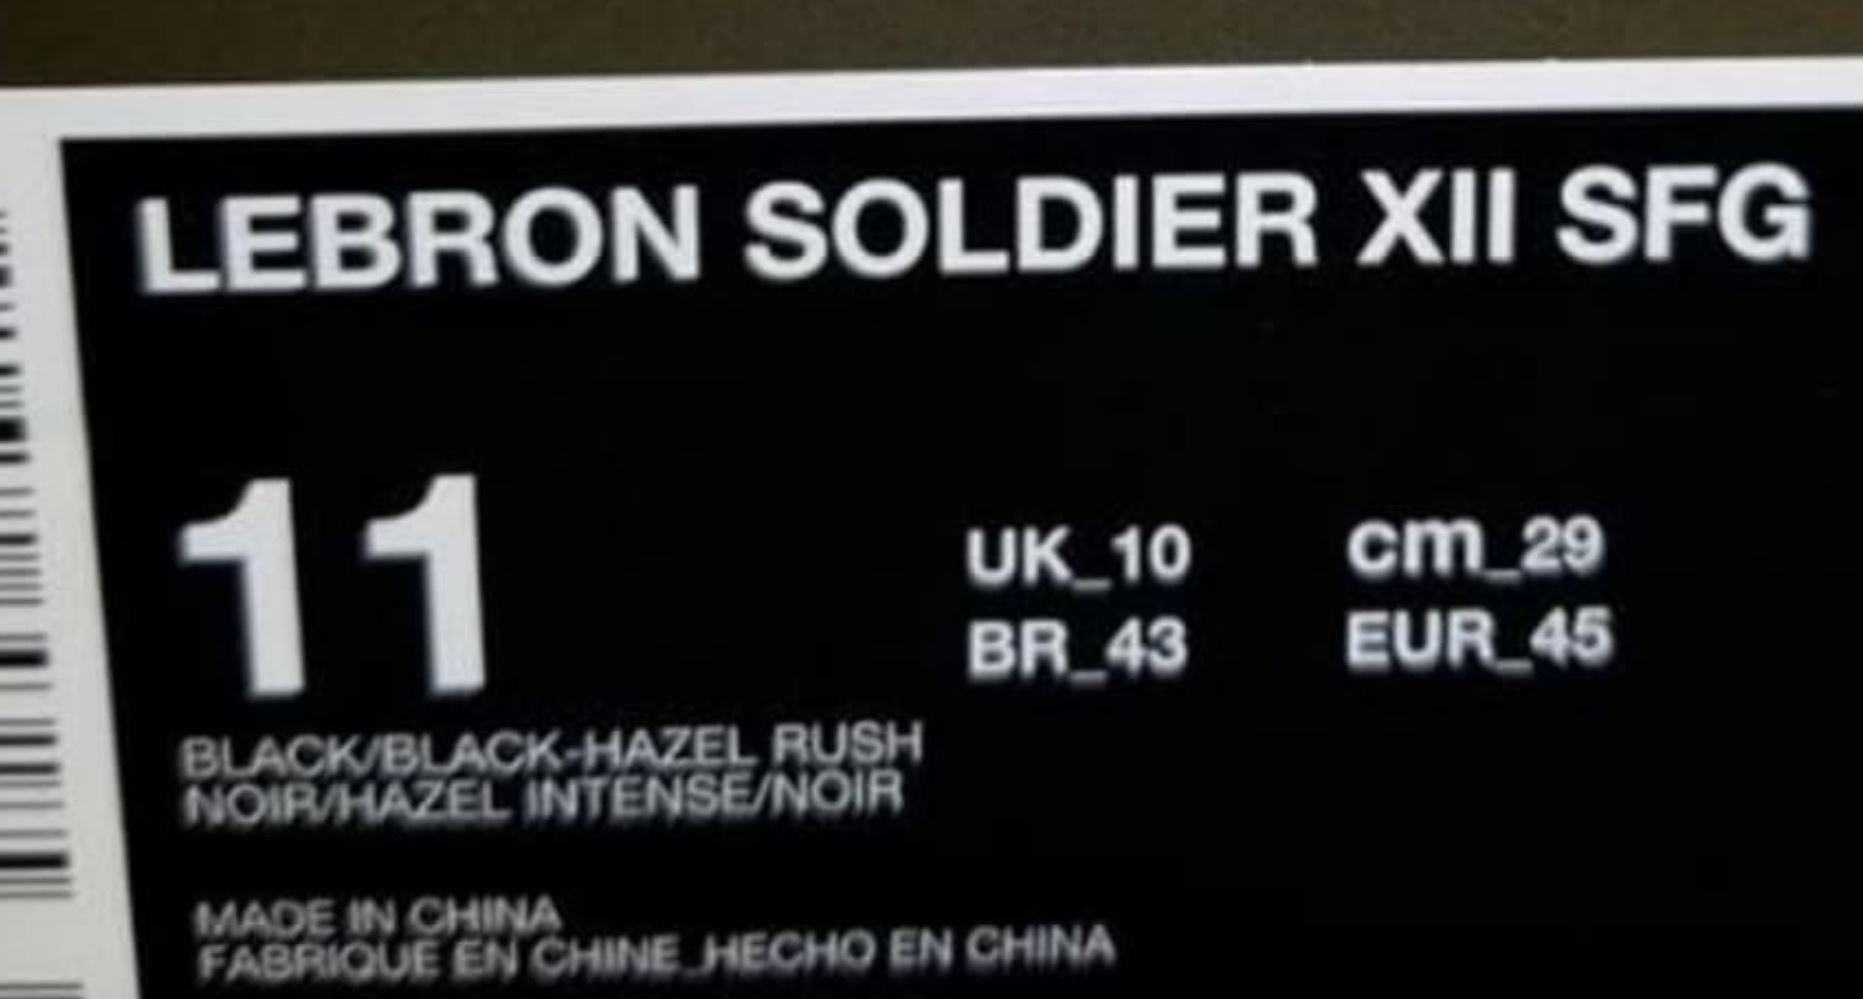 lebron soldier 12 box